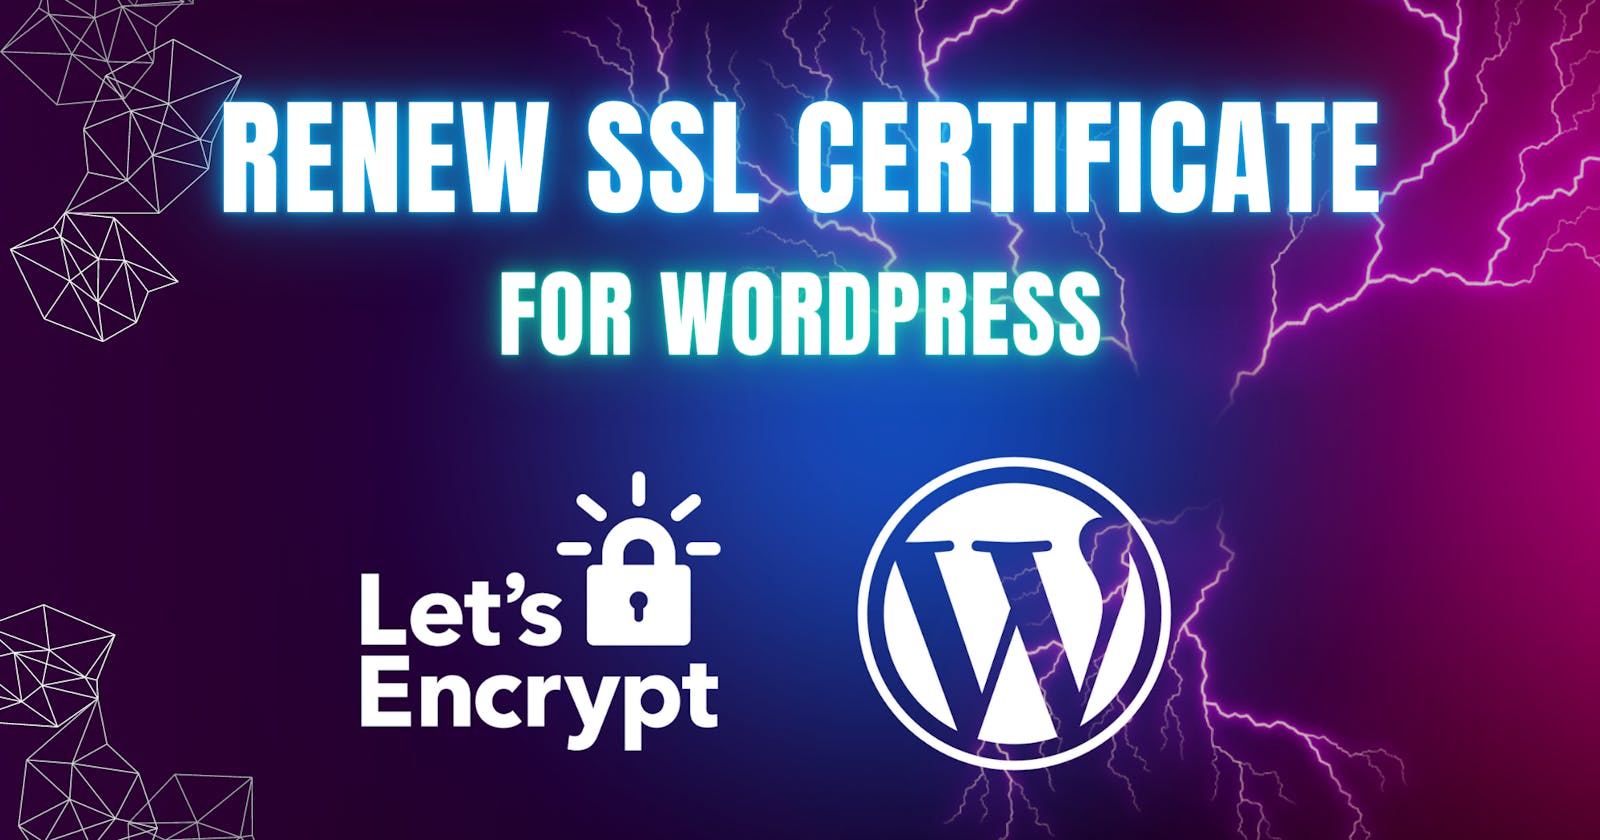 Renew LetsEncrypt SSL Certificate in WordPress by Bitnami